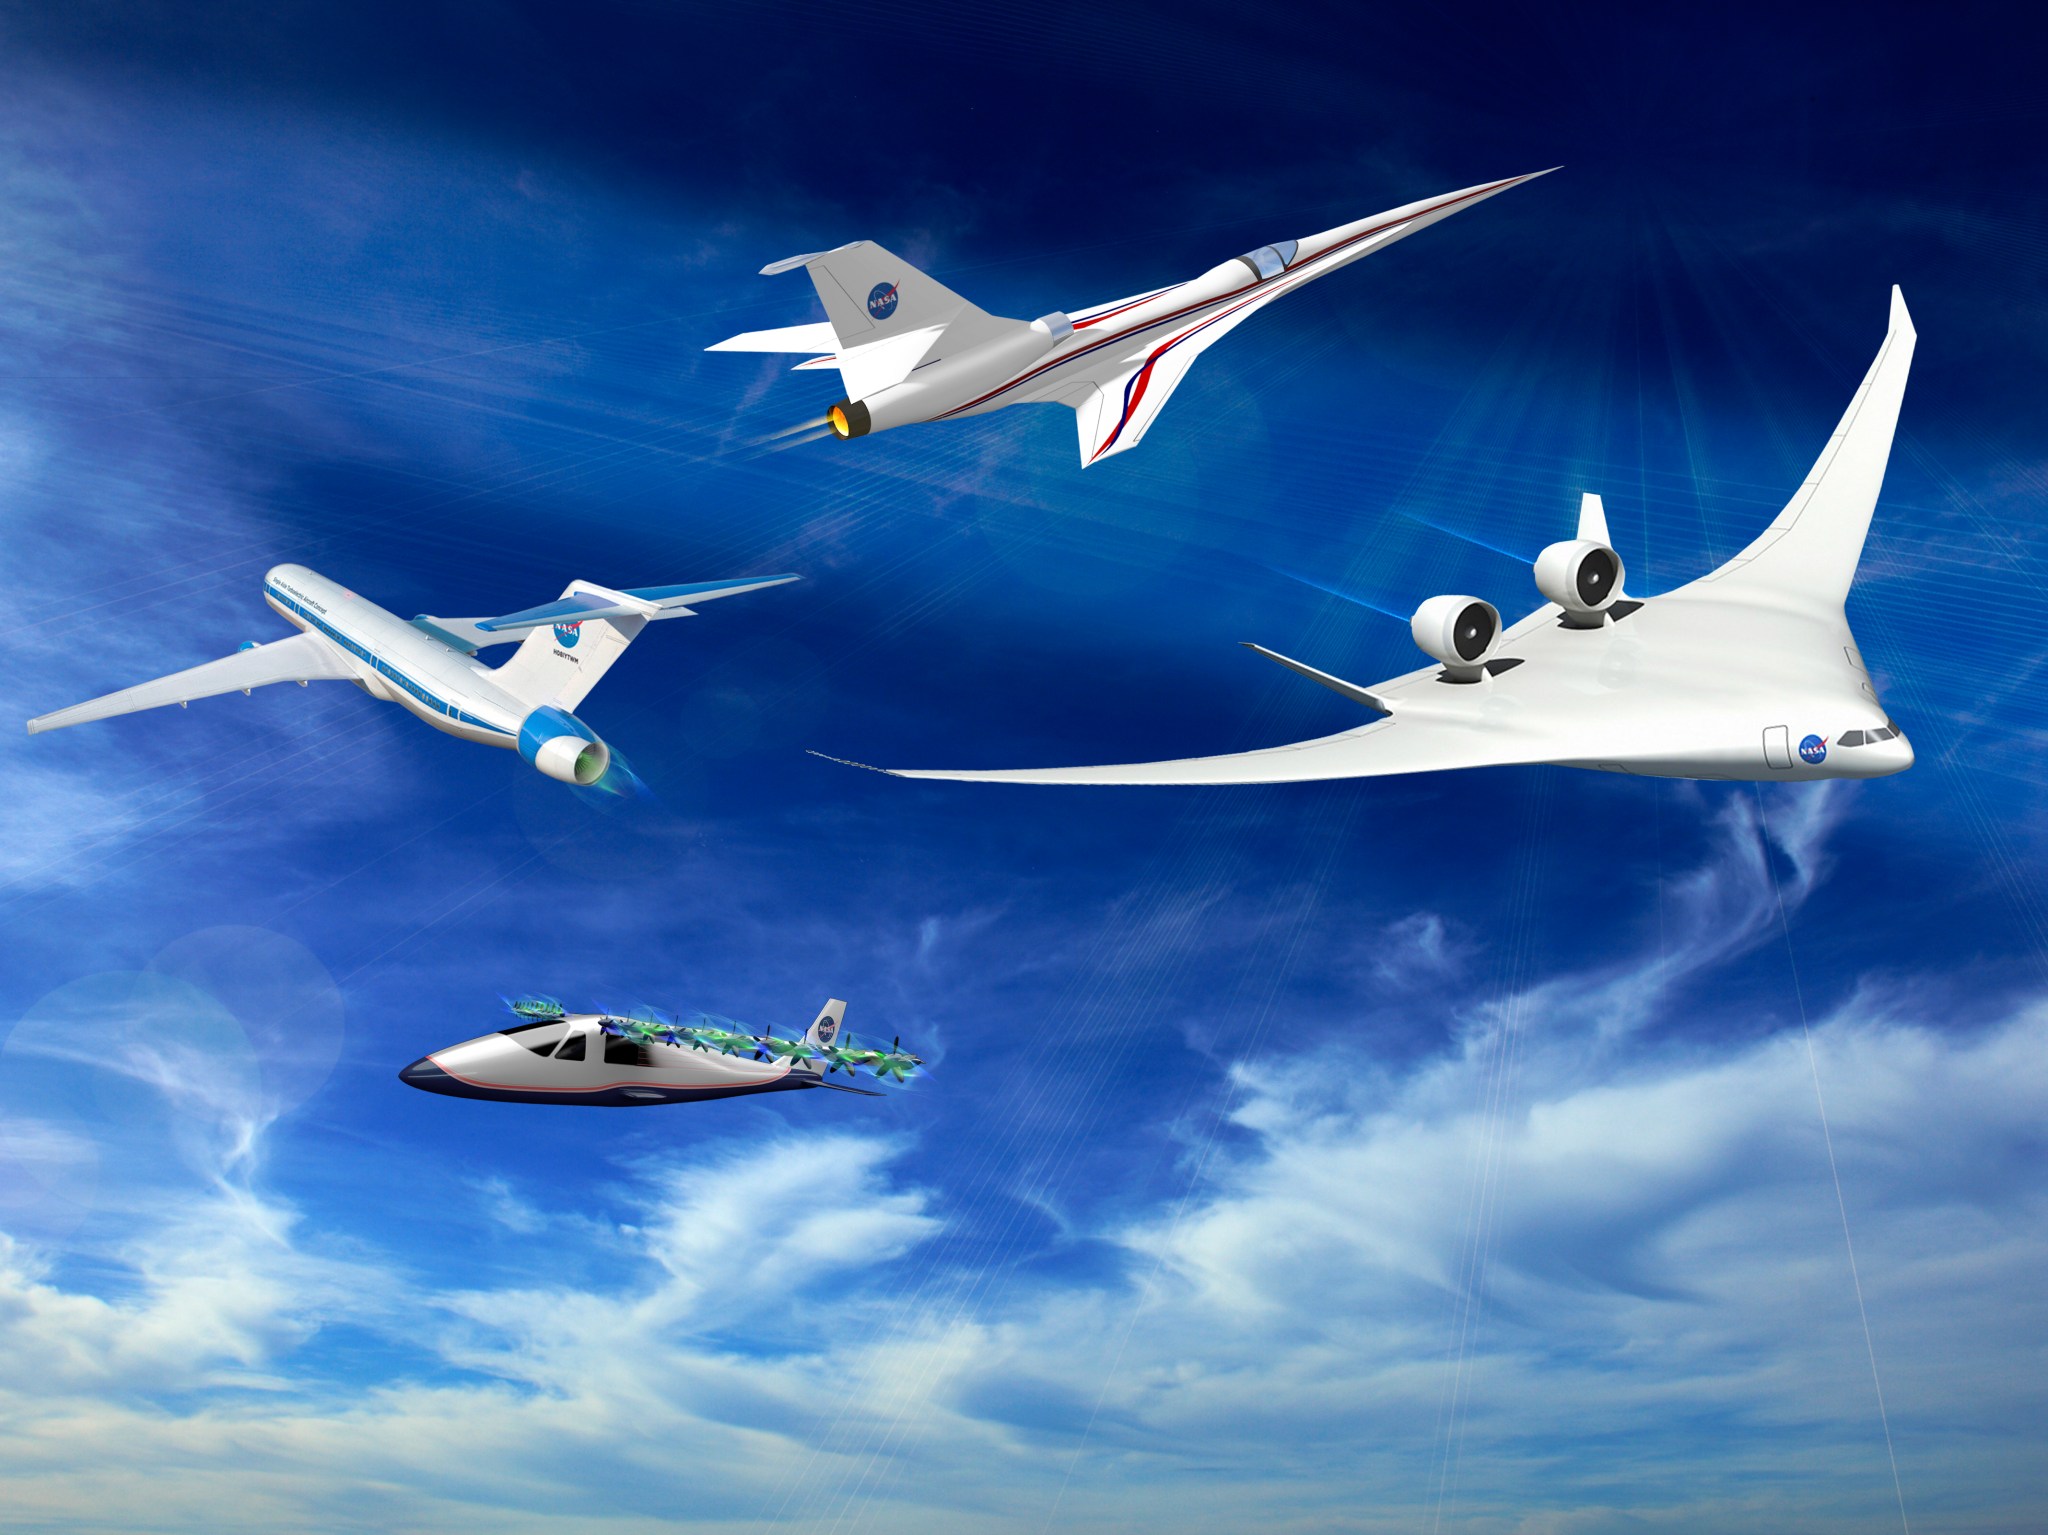 Artist concepts vehicles in flight across a blue sky.